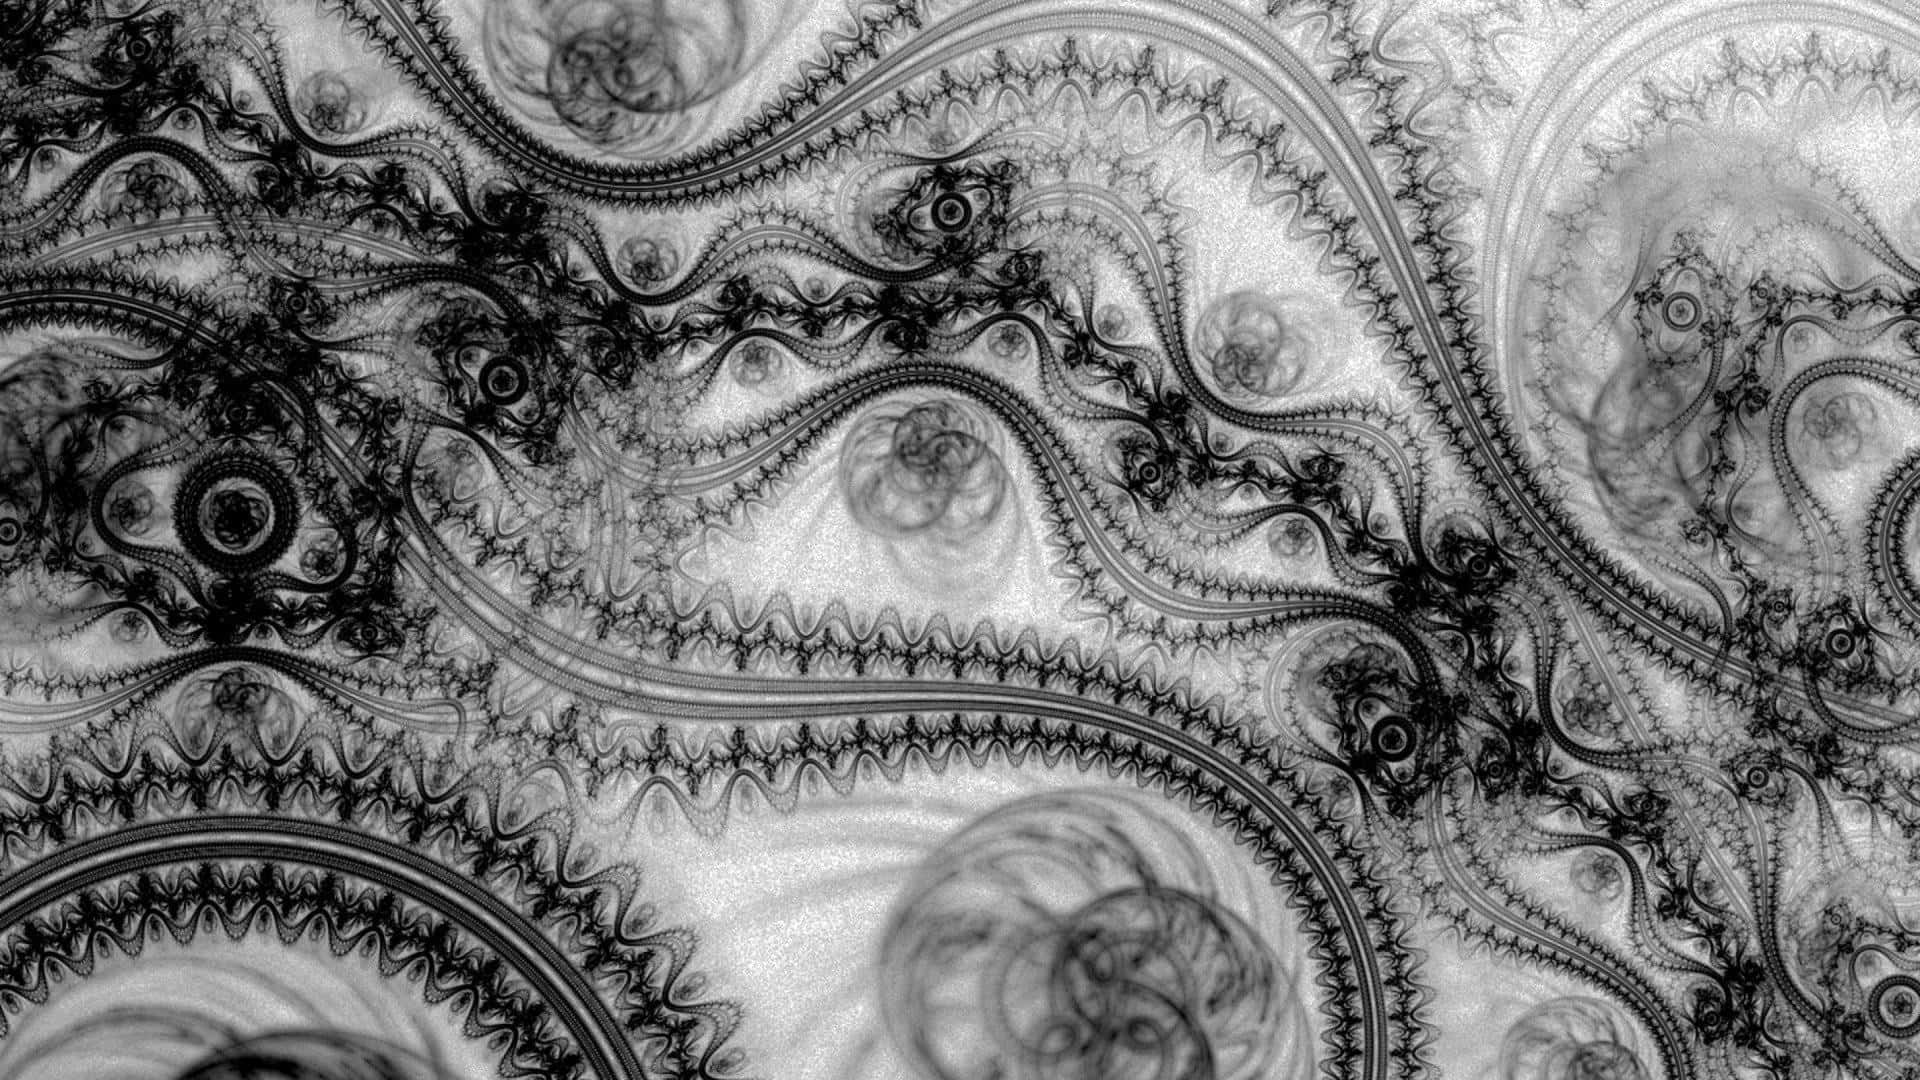 Beautiful lace fabric with intricate pattern